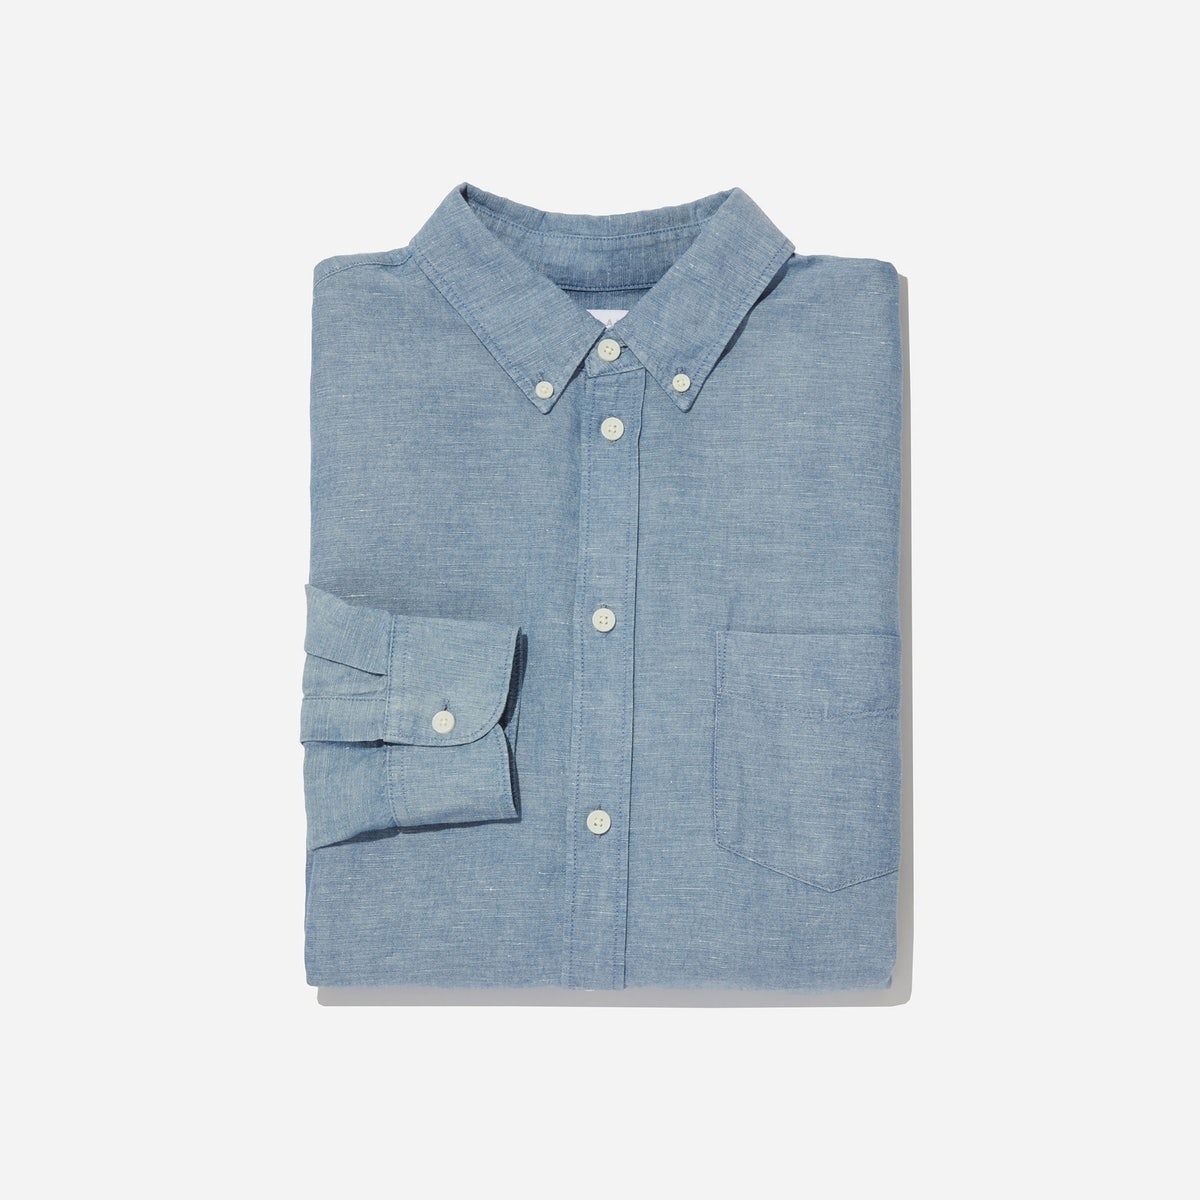 The Linen Chambray Shirt – $58